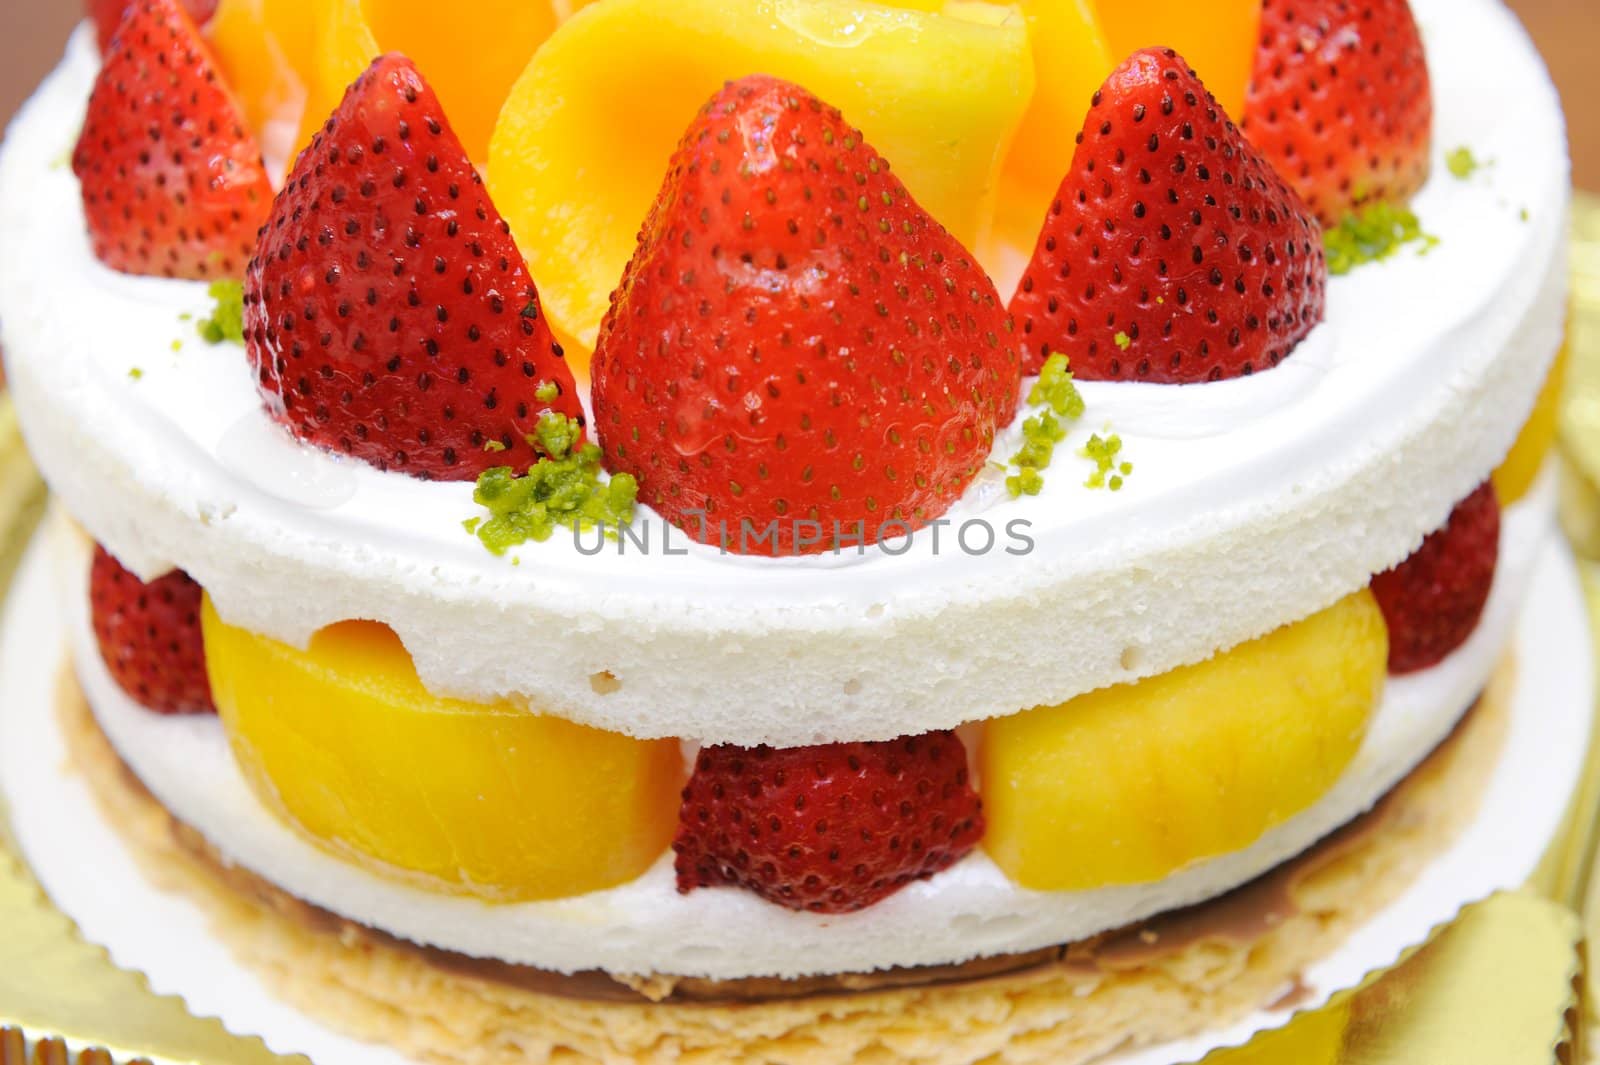 Cake with strawberry and mango